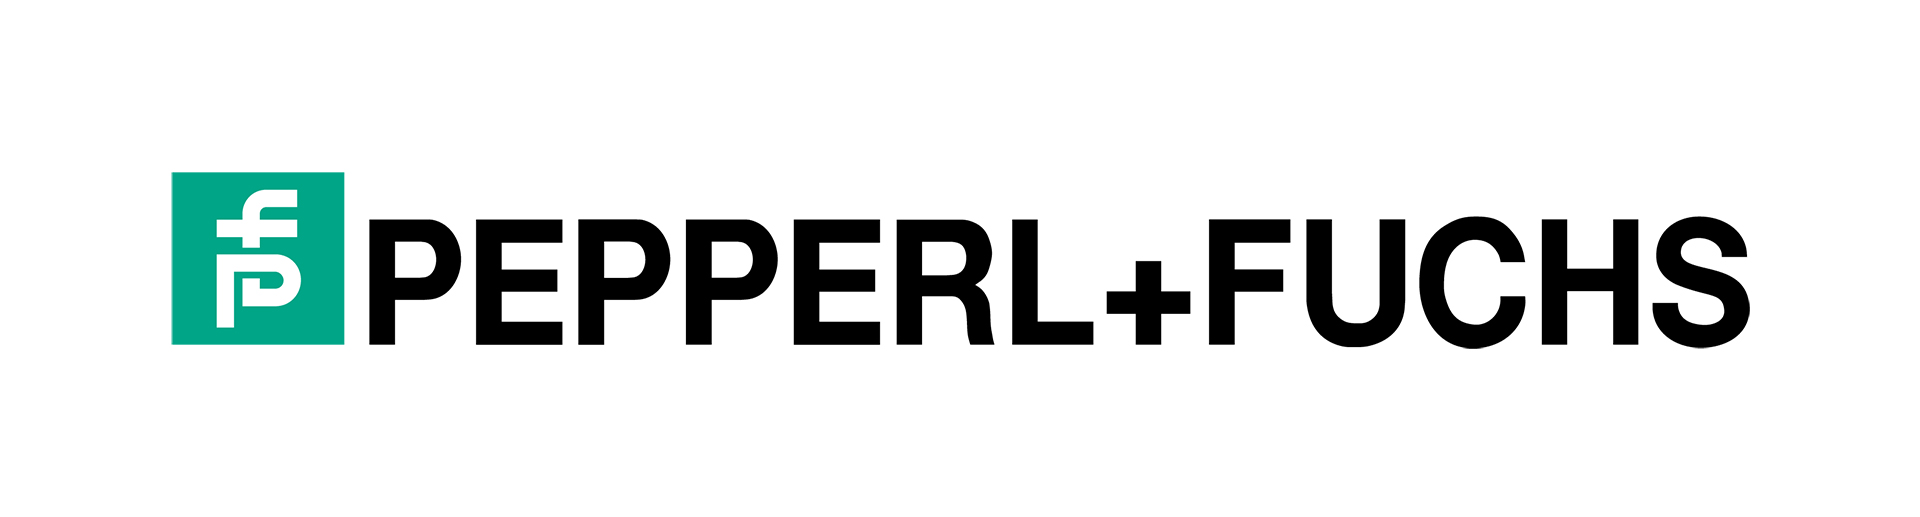 PepperlFuchs-Logo > Dassault Systèmes